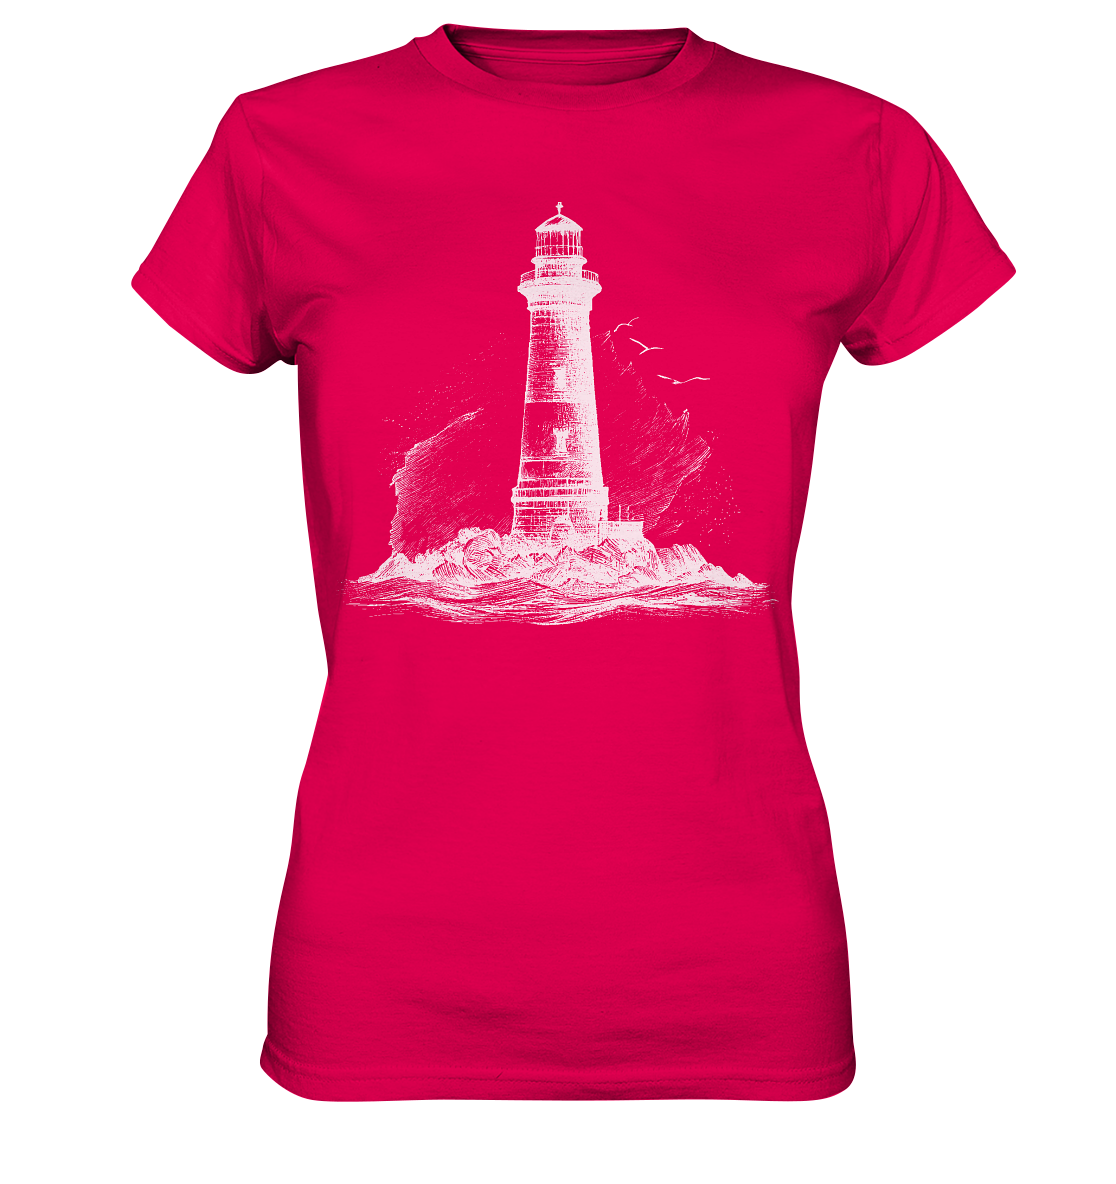 Anton - Lighthouse - Ladies Premium Shirt